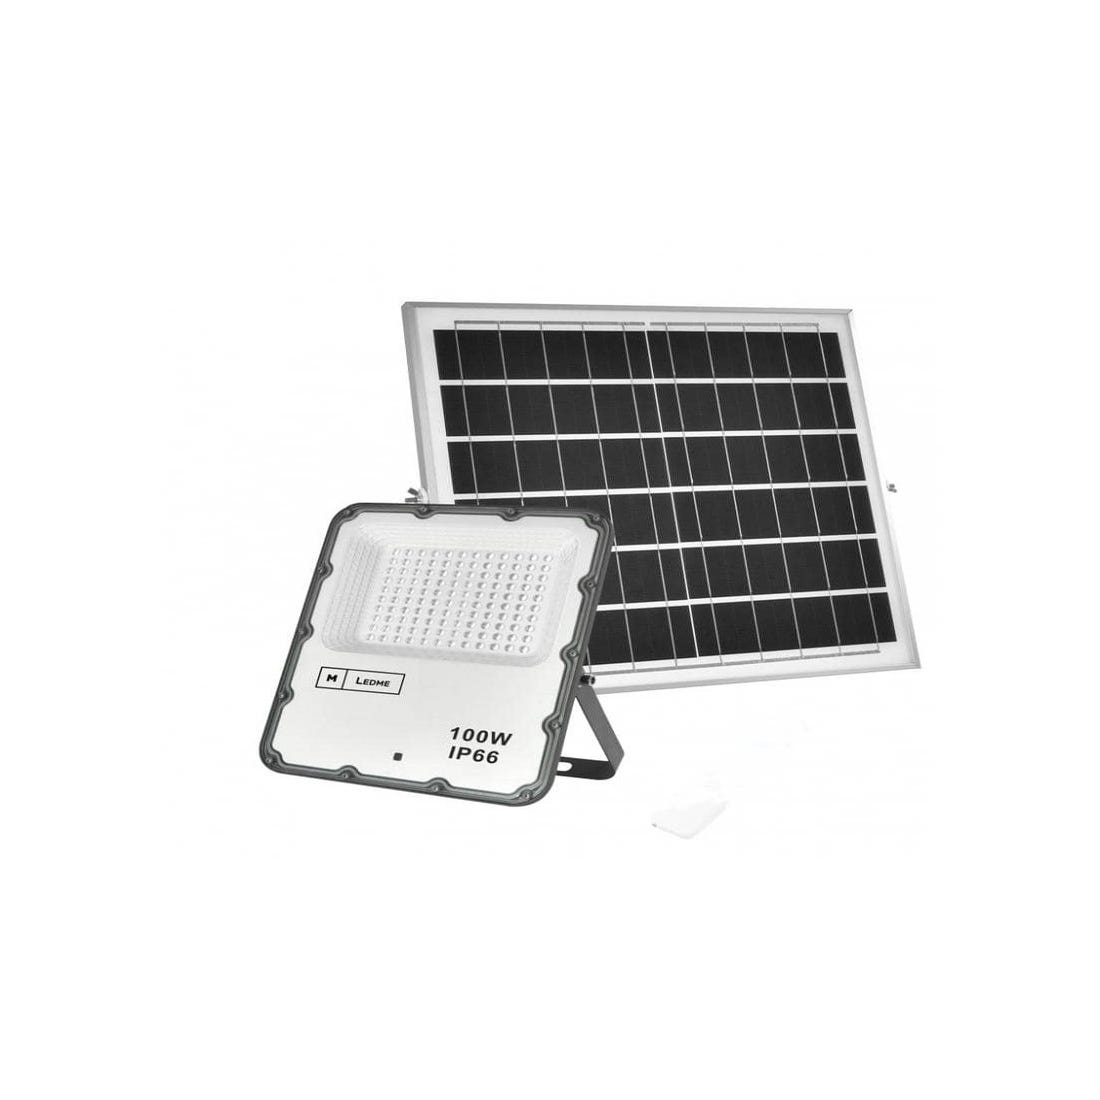 Farola Solar 100W ELEDCO, Sensor de Movimiento, Control Remoto, Luz Neutra  4000K, Autonomía 8-15 Horas